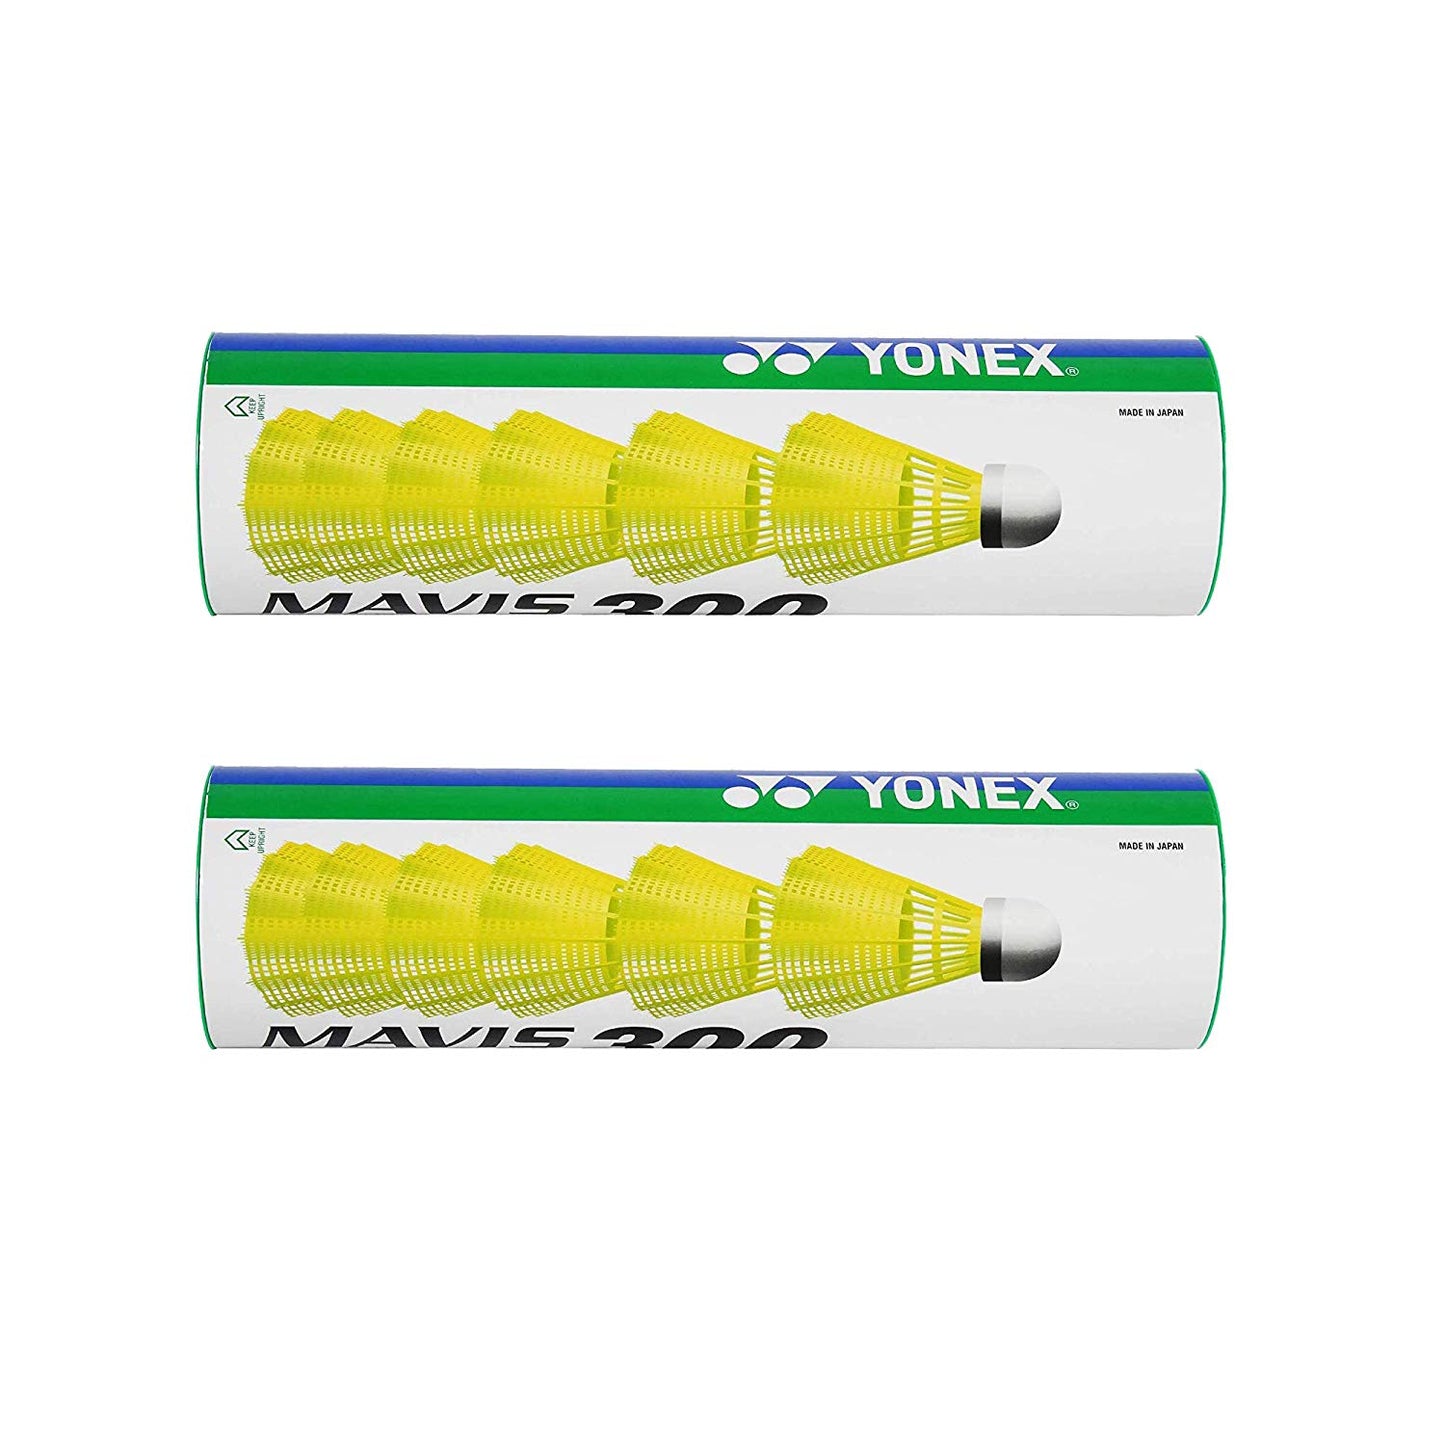 Yonex Mavis 300 Green Cap Nylon Shuttlecock Pack of 2 Cans, Yellow - Best Price online Prokicksports.com